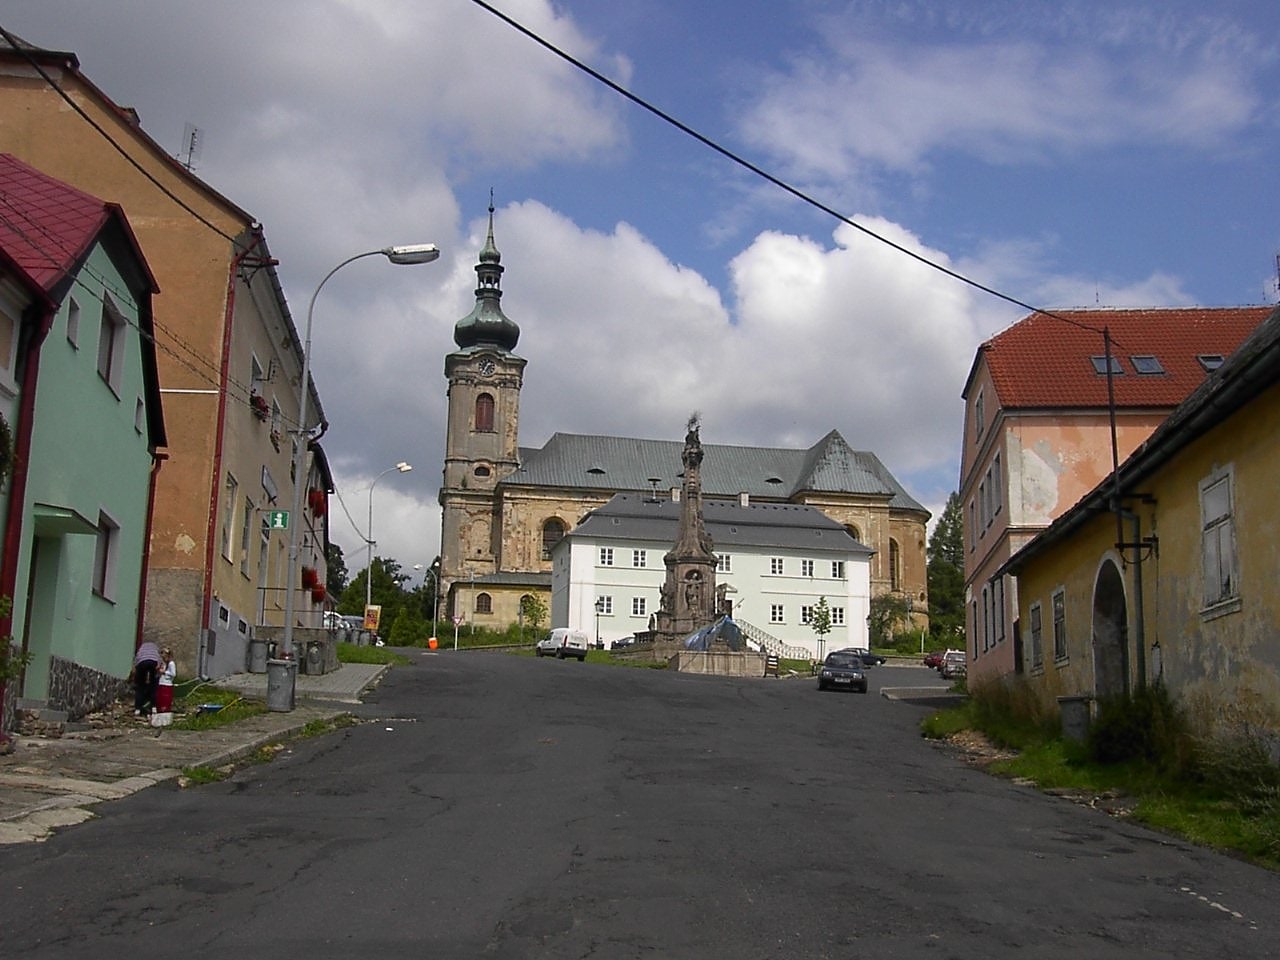 Teplá, Czech Republic